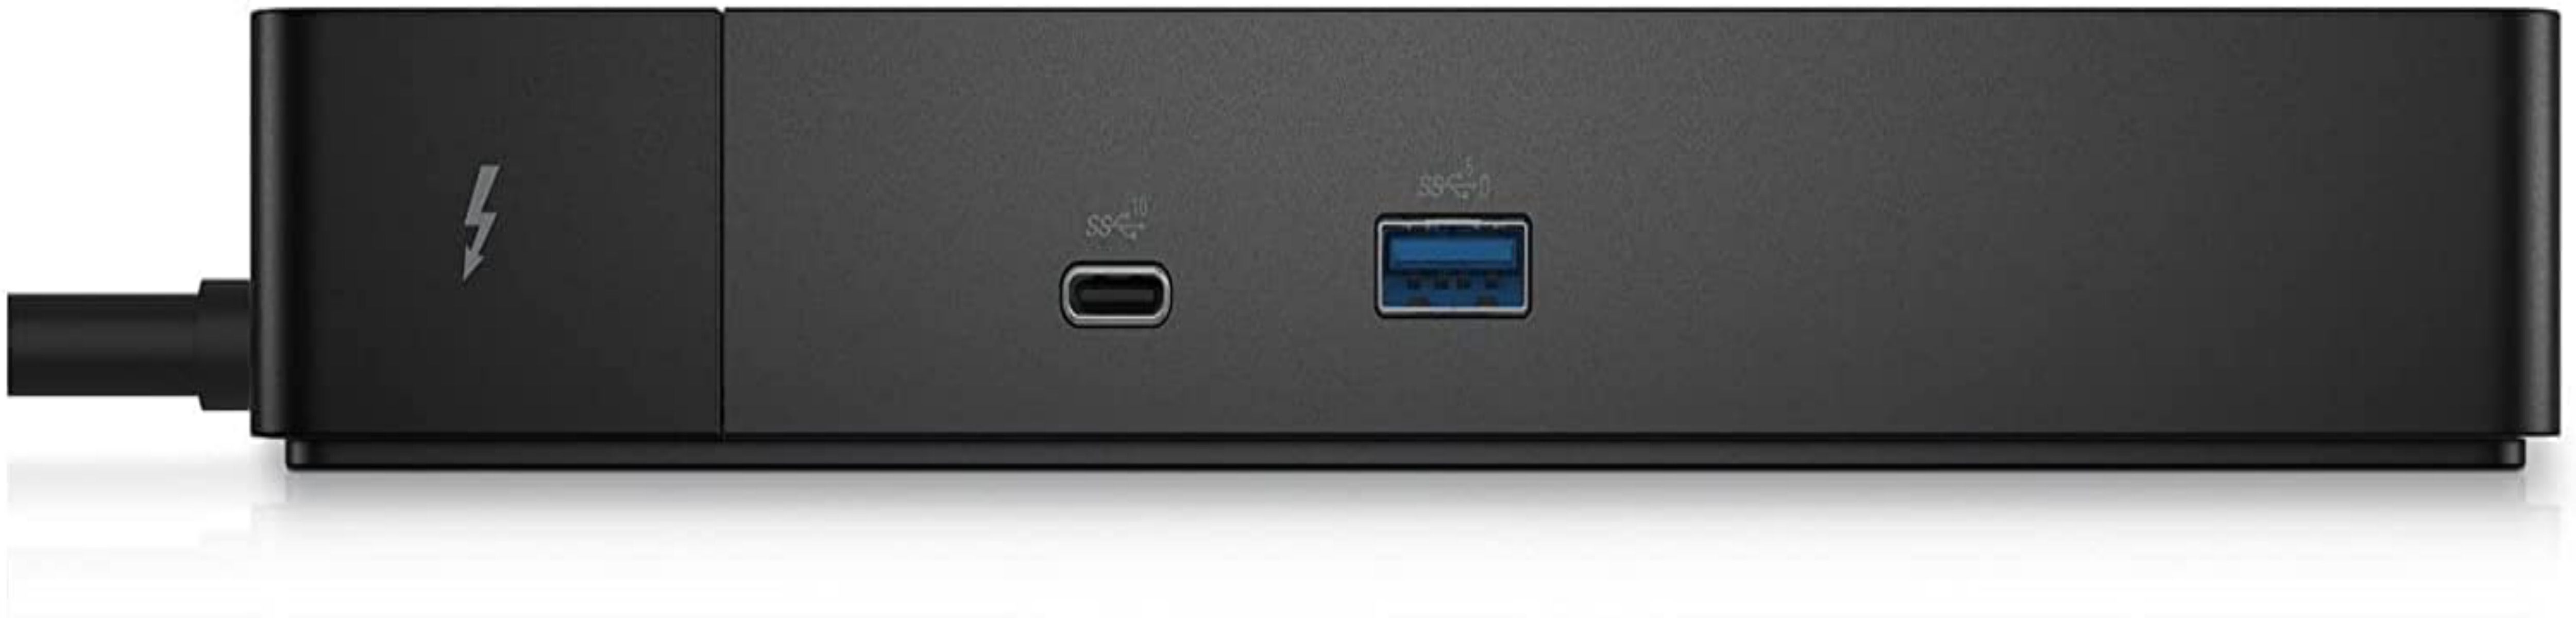 Front image of black Dell thunderbolt 4 docking station showing ethernet and USB-C 3.2 Gen 2 ports